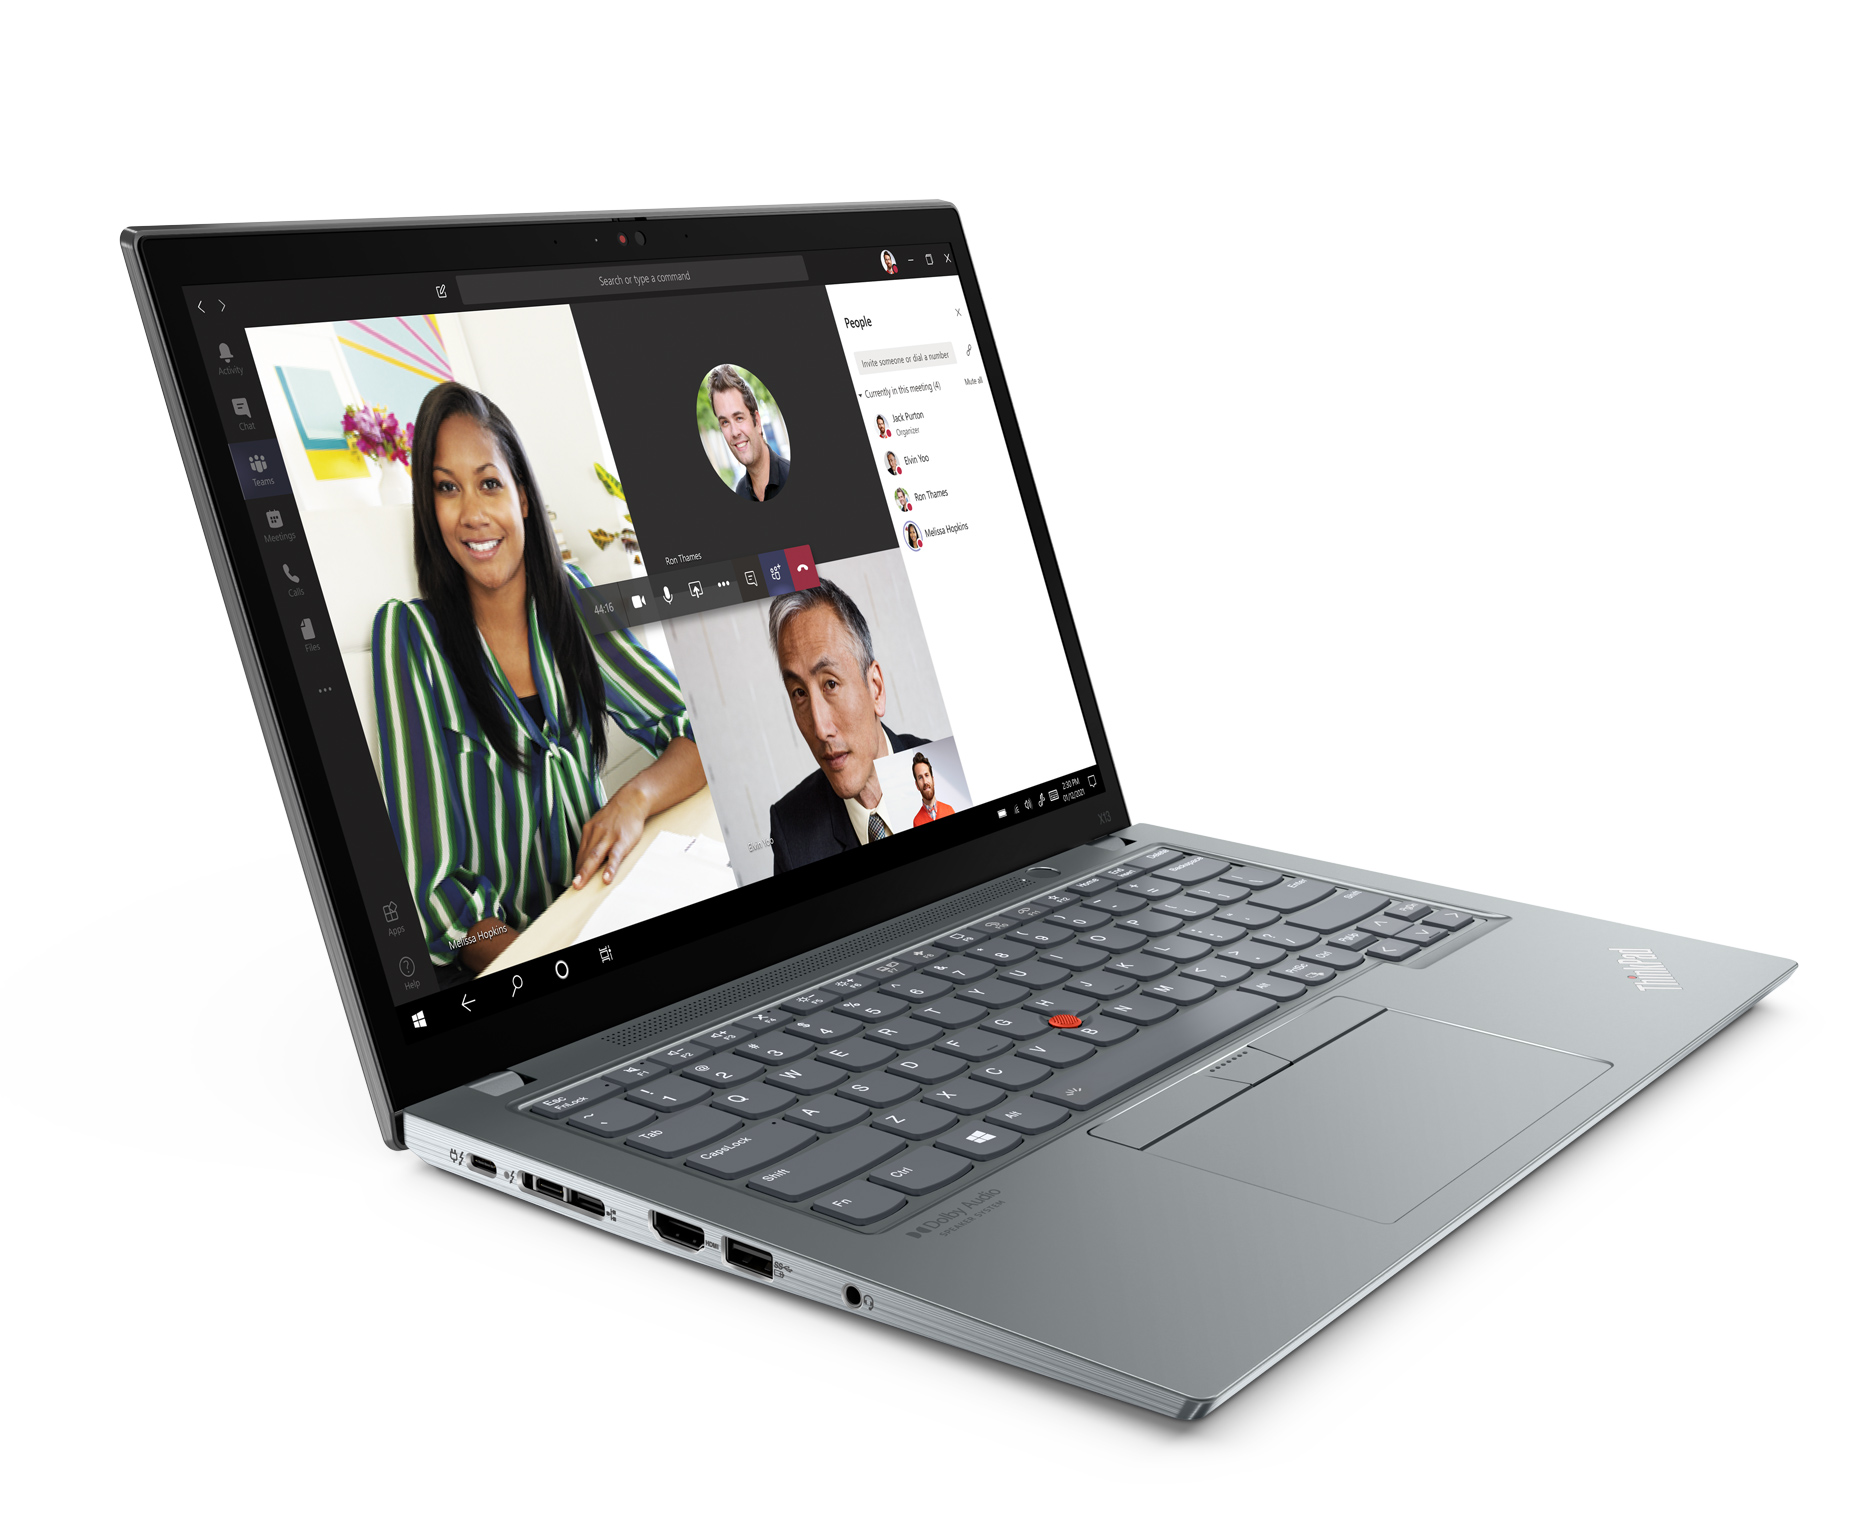 Updated Lenovo ThinkPad Windows 10 laptops deliver enhanced 